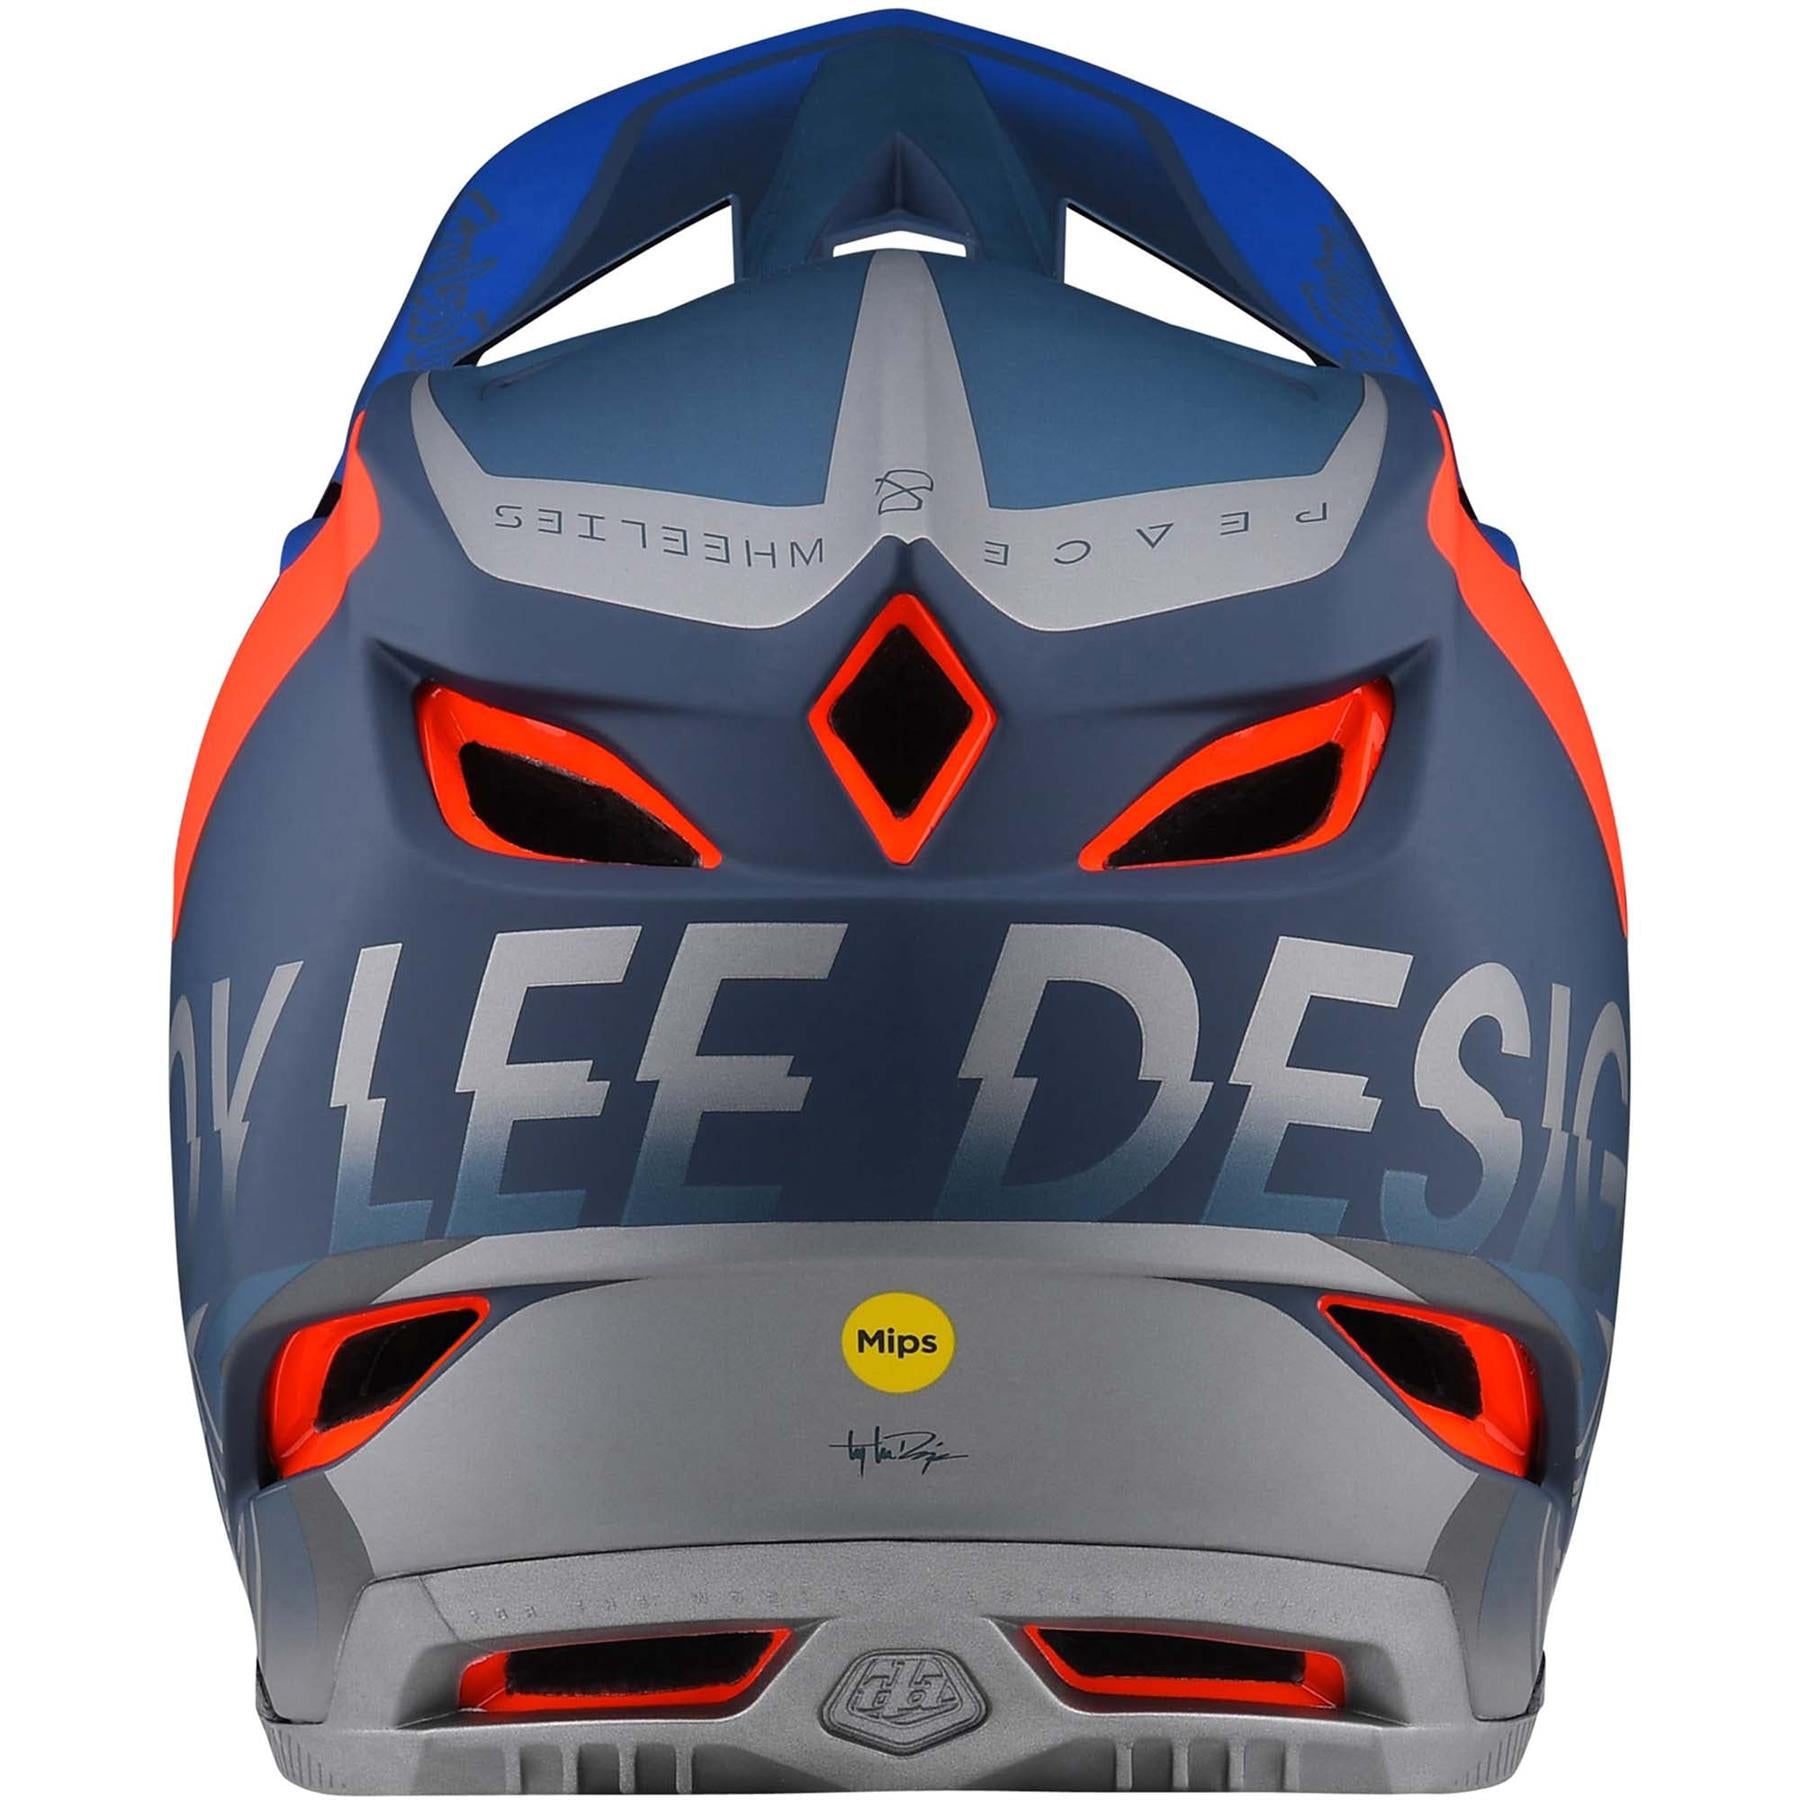 Troy Lee D4 Composite Race Helmet - Qualifier Slate/Red